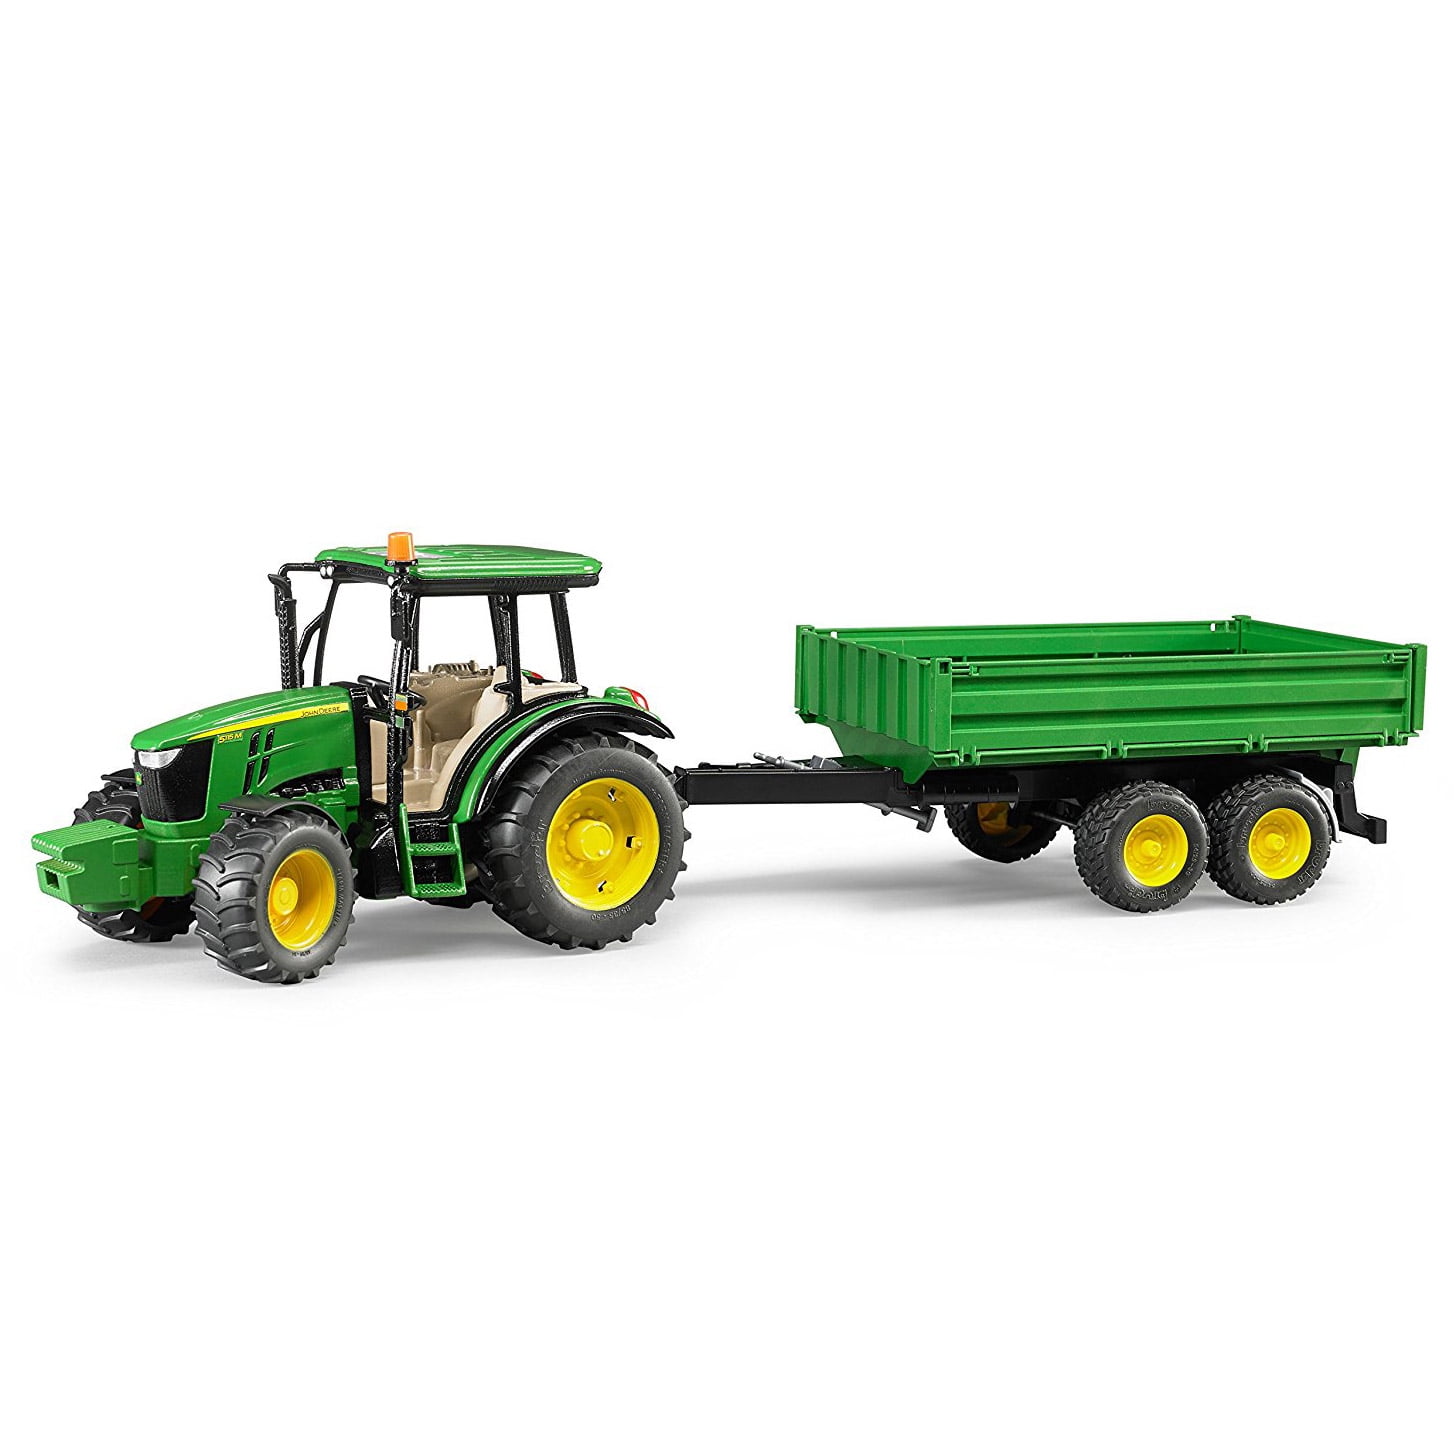 John Deere 7330 Big Farm Tractor 1:16 New Free Shipping 